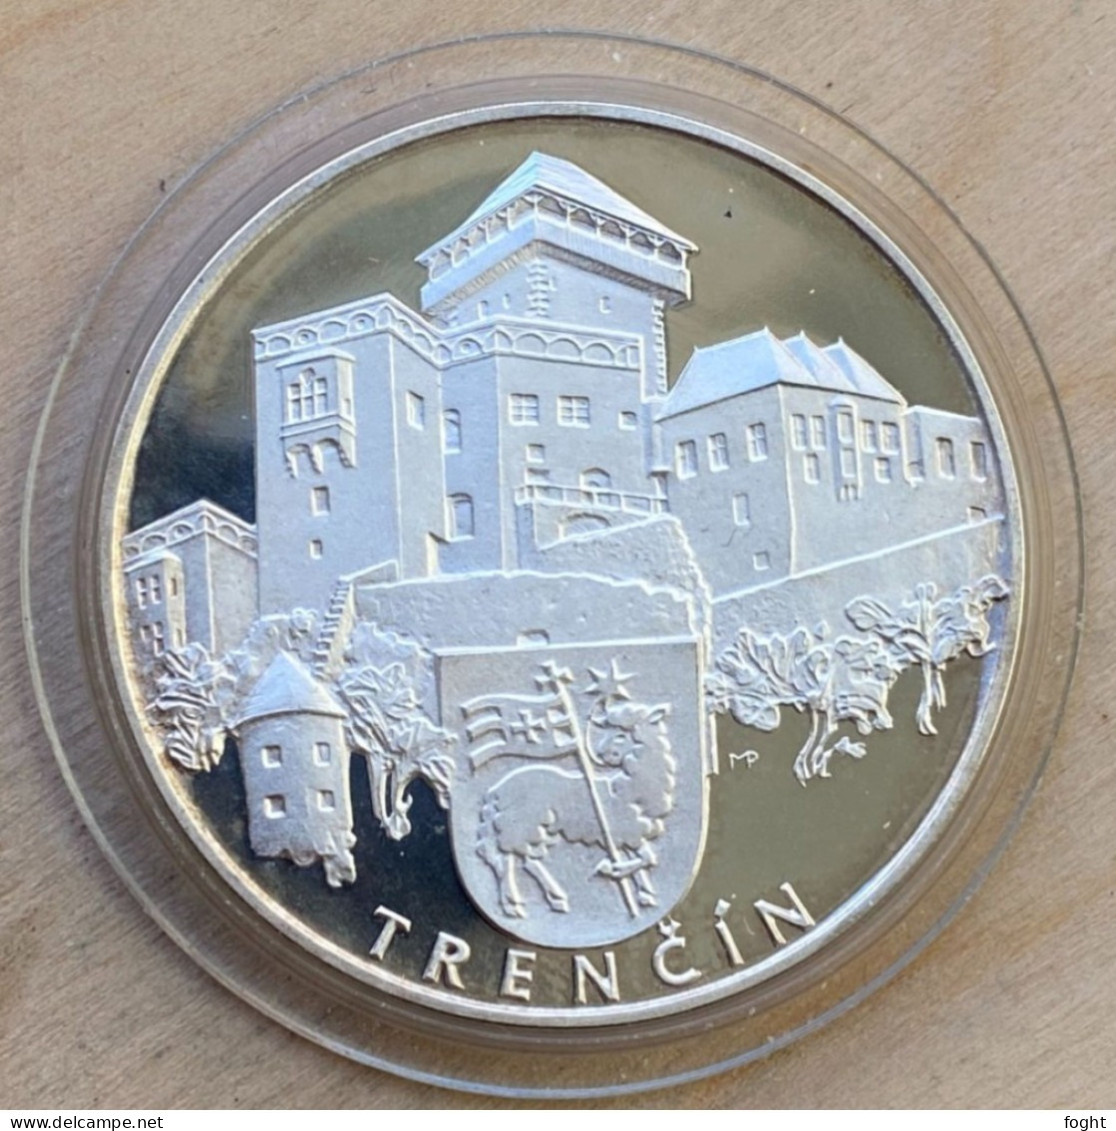 .900 Silver Slovak Souvenir Medal - Slovak Castles: TRENČÍN,6477 - Professionals / Firms